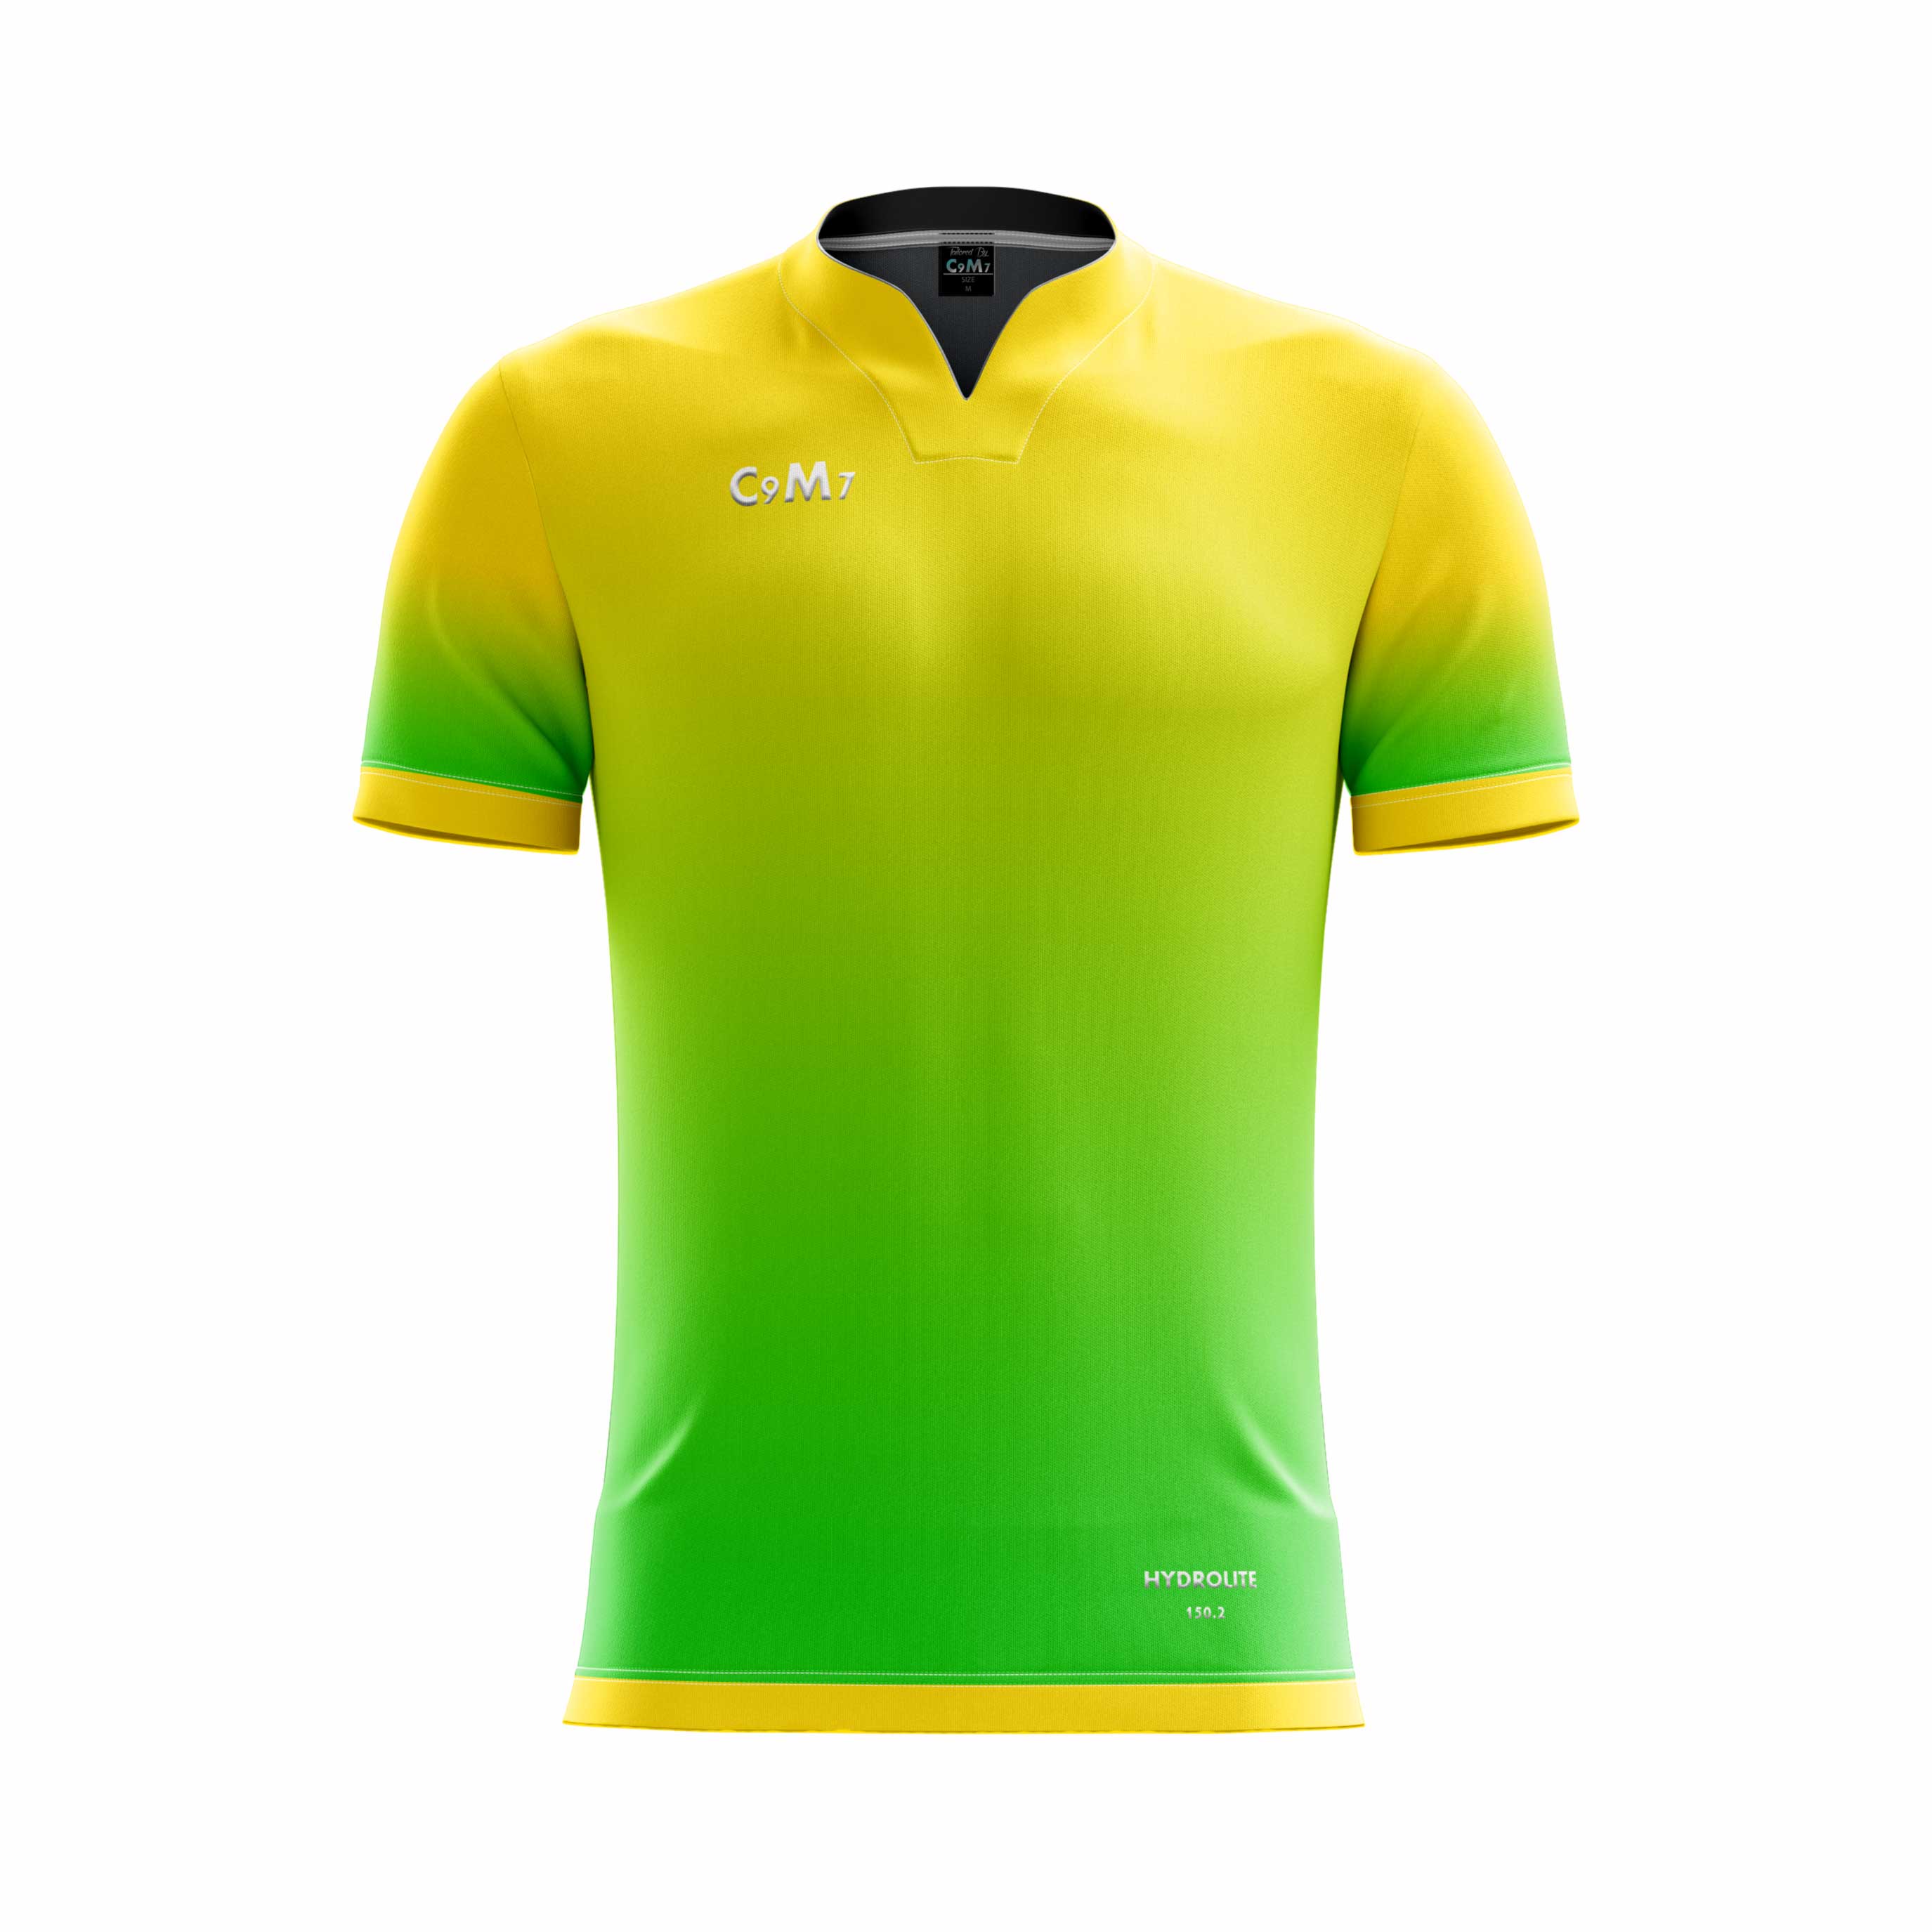 green yellow jersey football